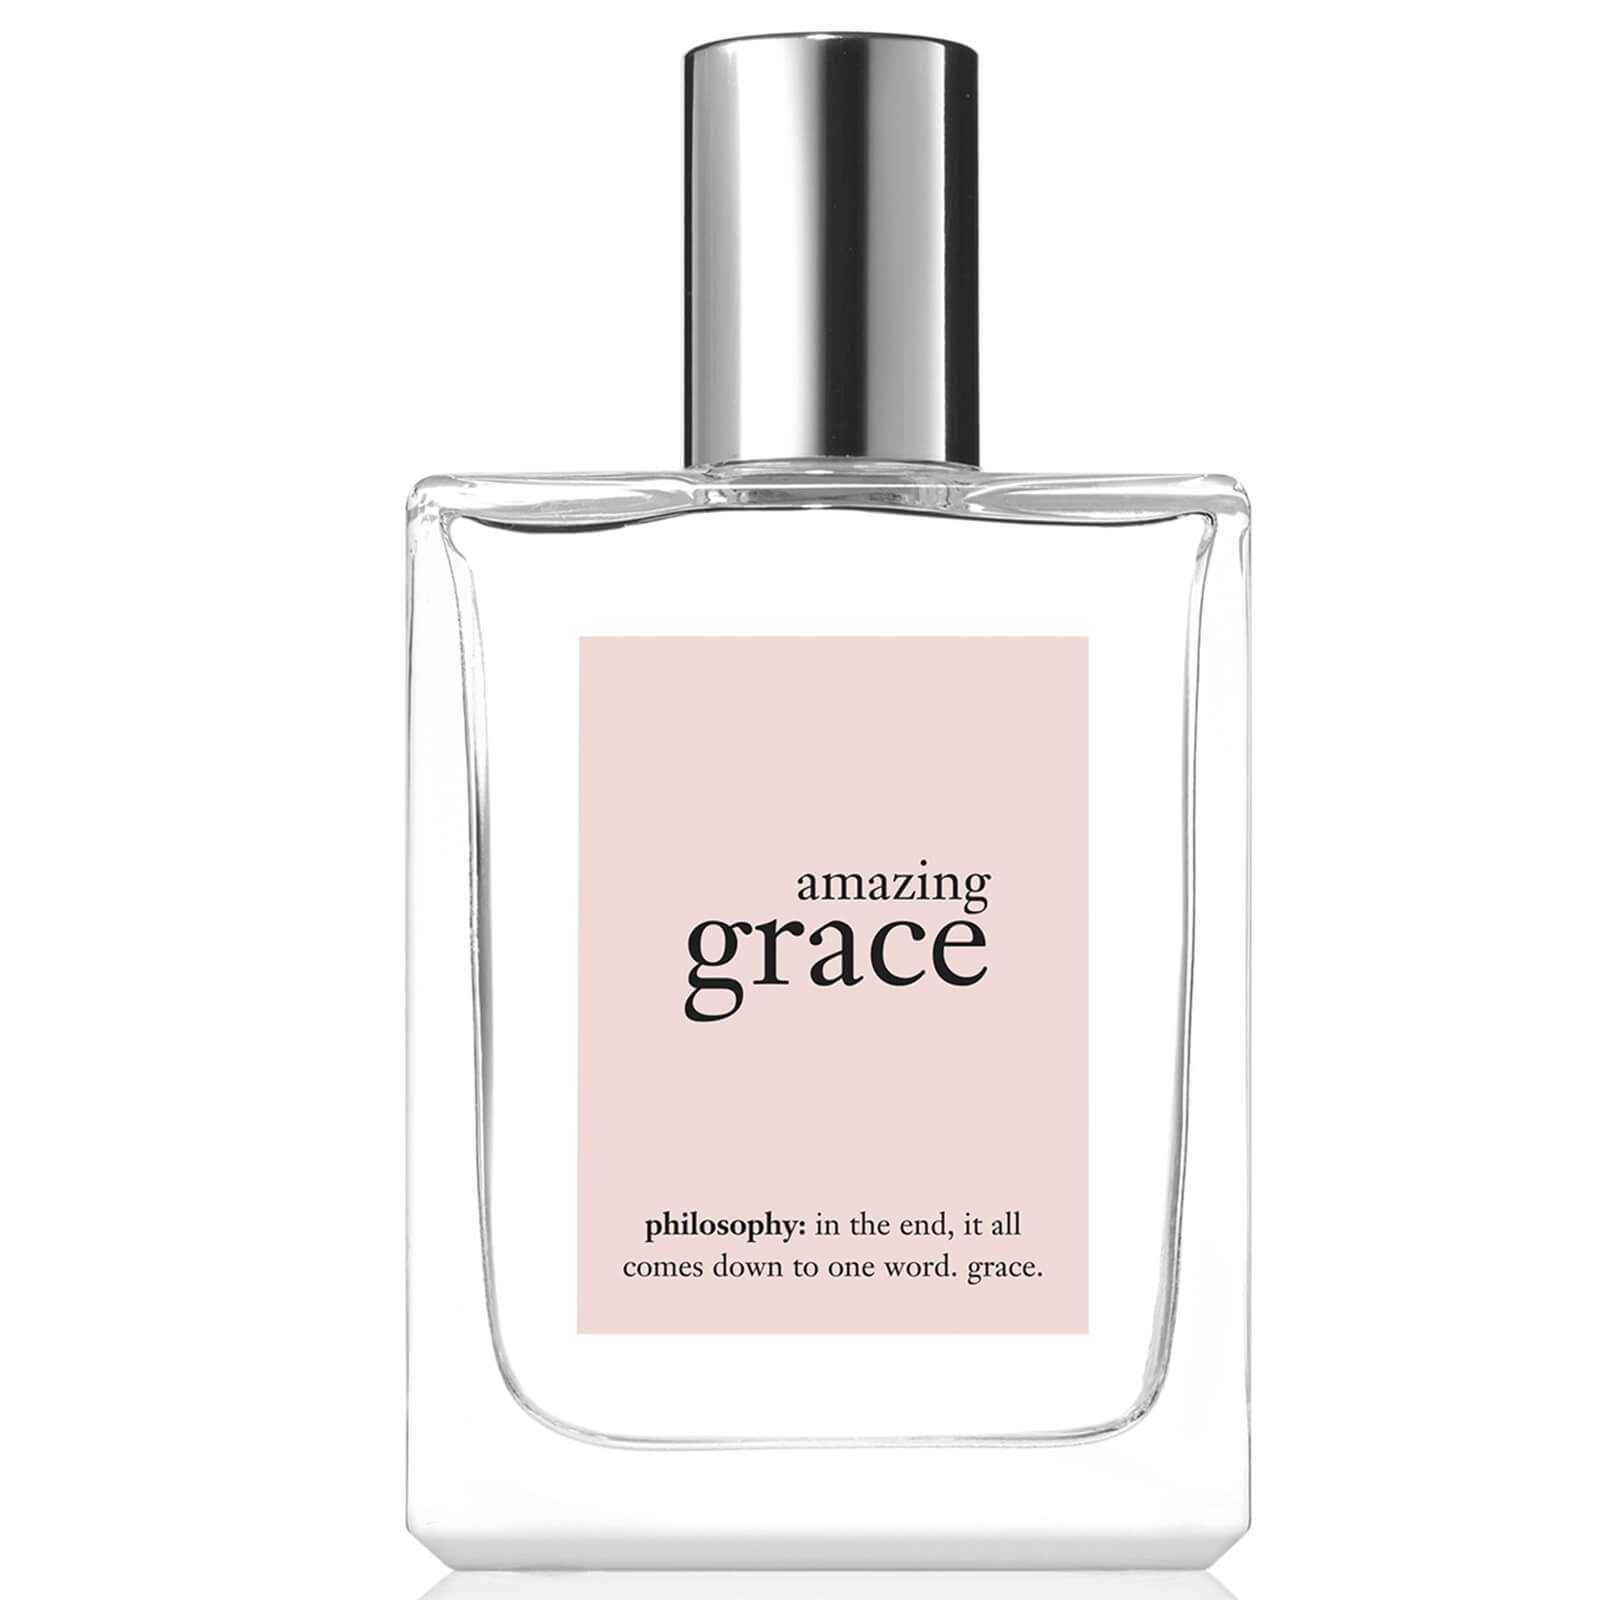 Photos - Women's Fragrance Philosophy Amazing Grace Spray Fragrance Eau de Toilette 60ml 99350073134 